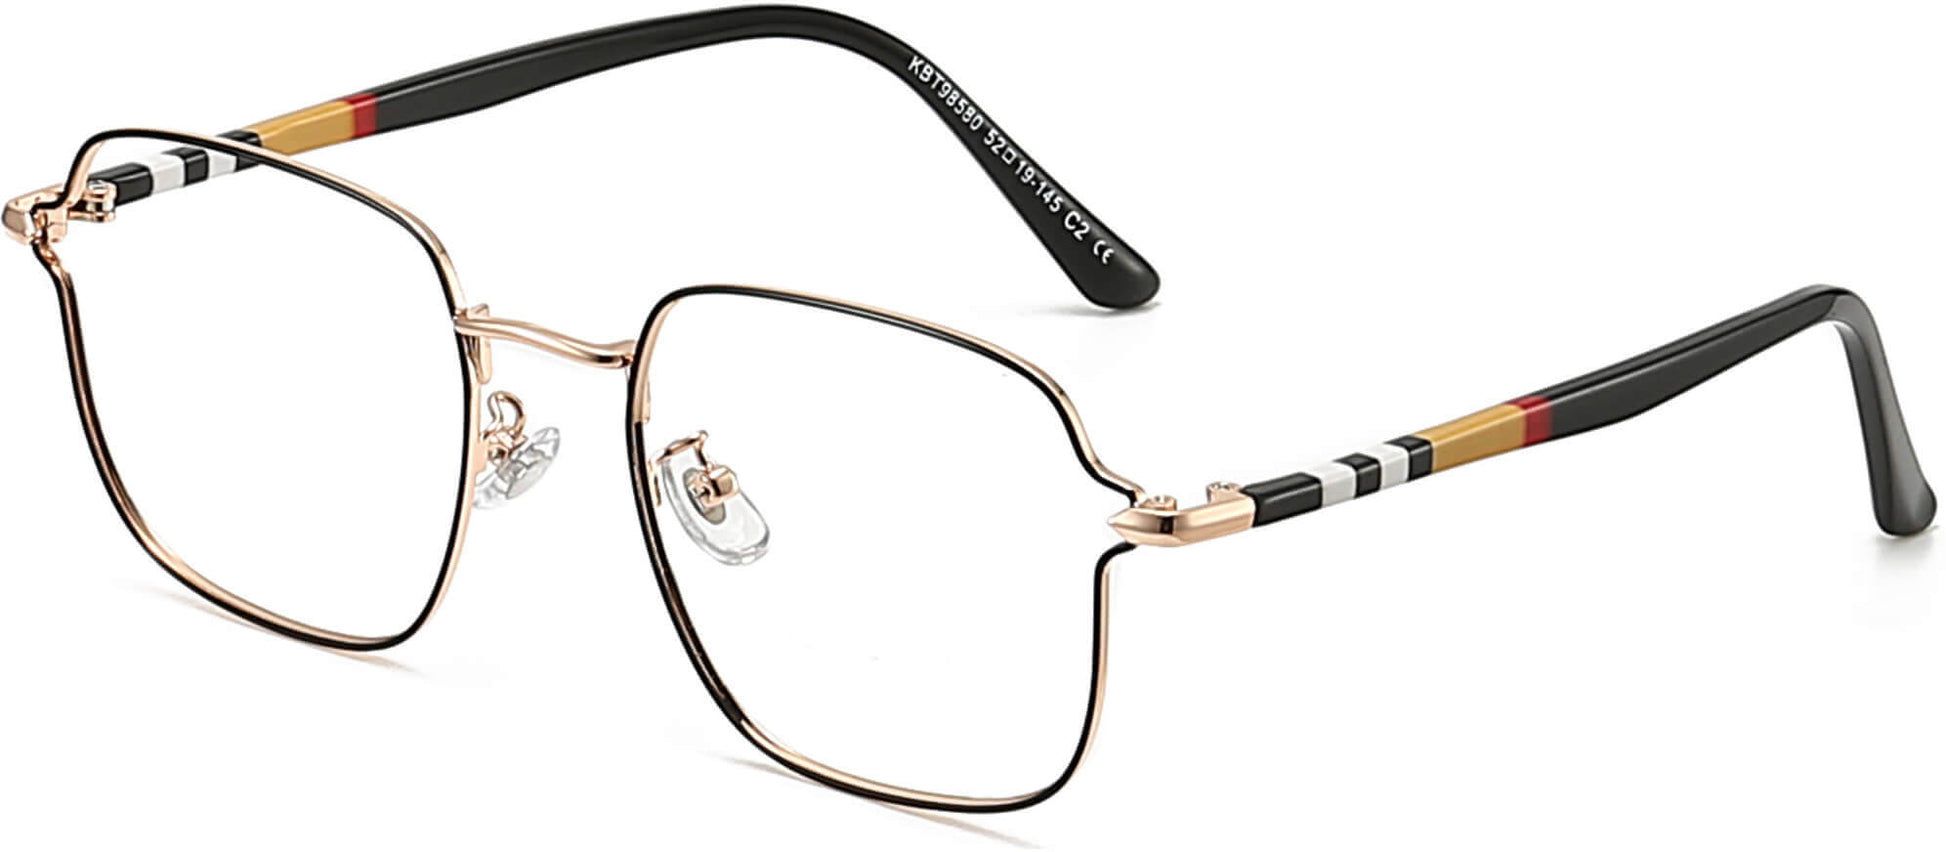 Daphne Geometric Black Eyeglasses from ANRRI, angle view